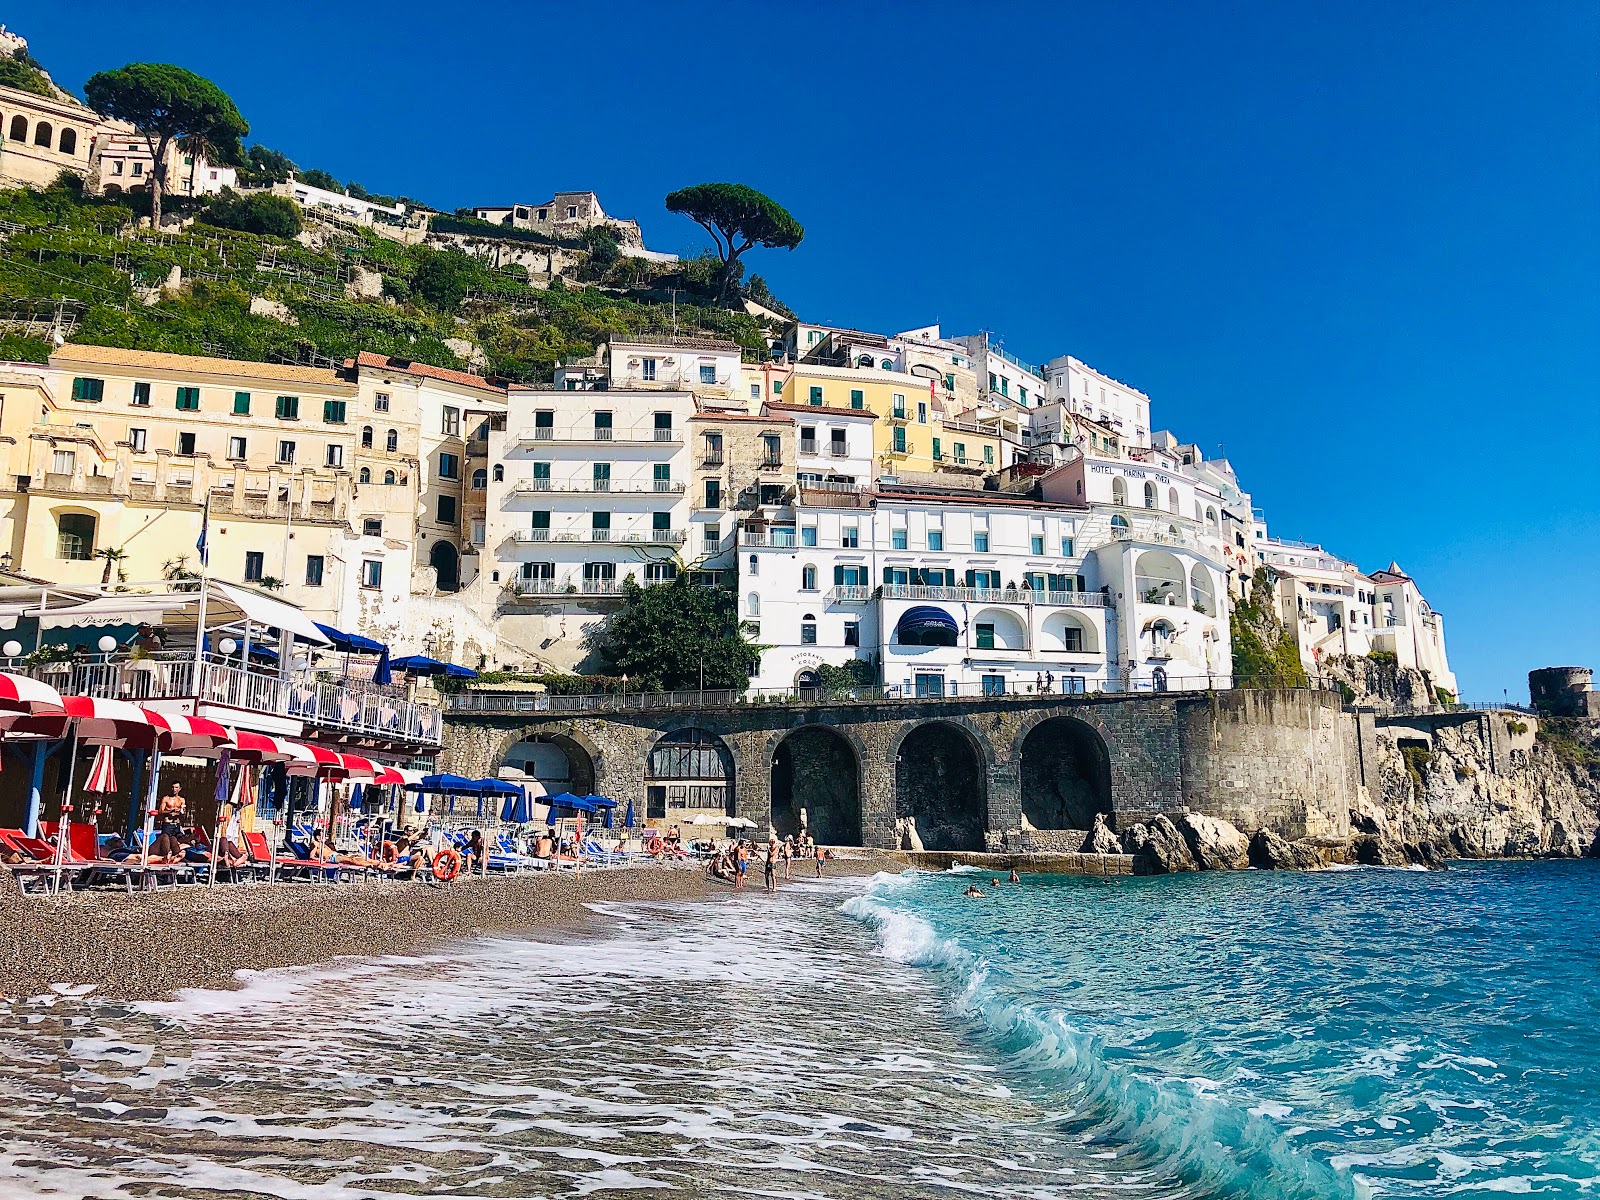 Fotografija Amalfi beach z majhen zaliv